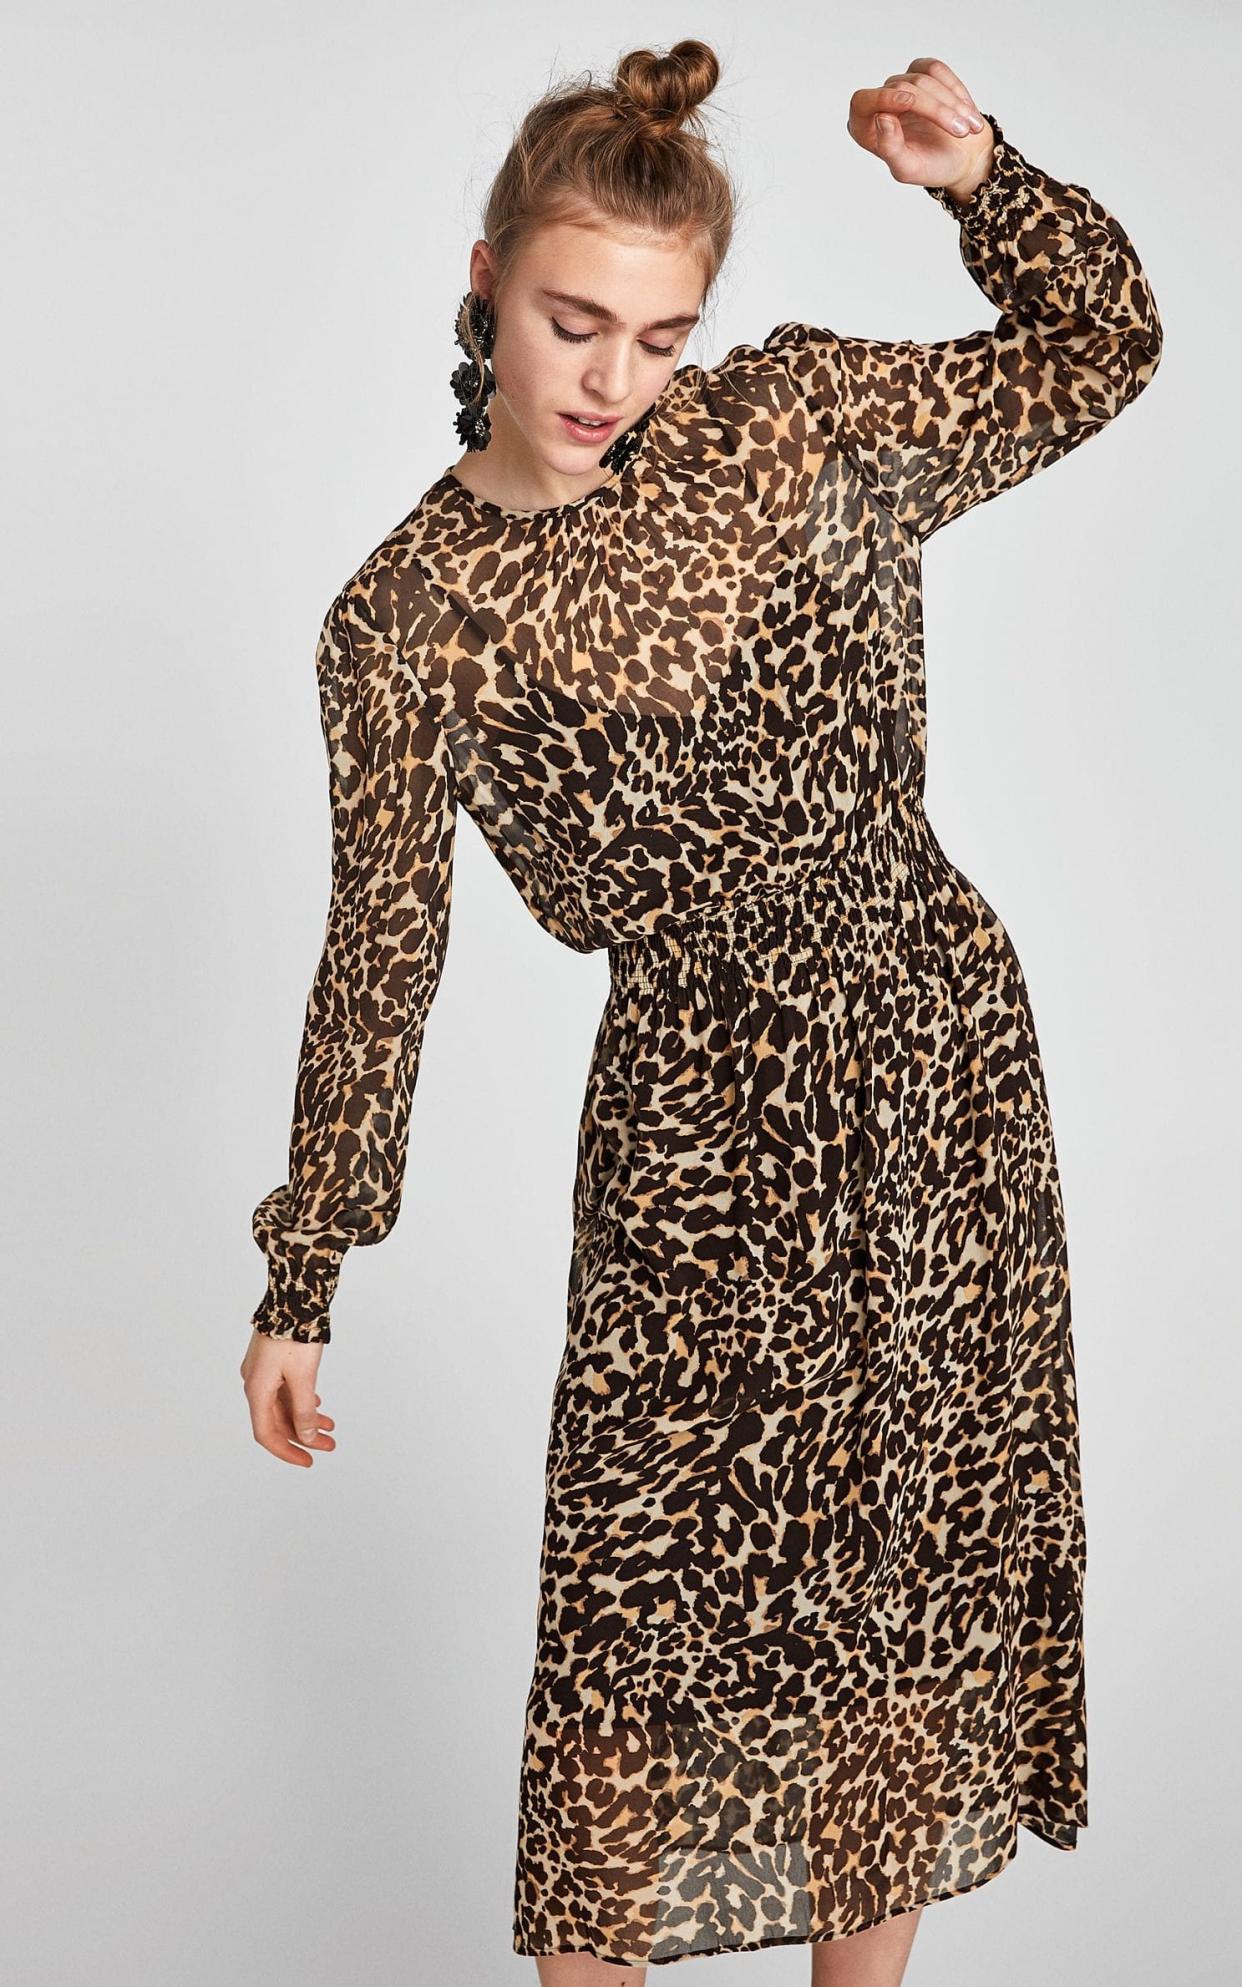 Animal print dress, £69.99, Zara